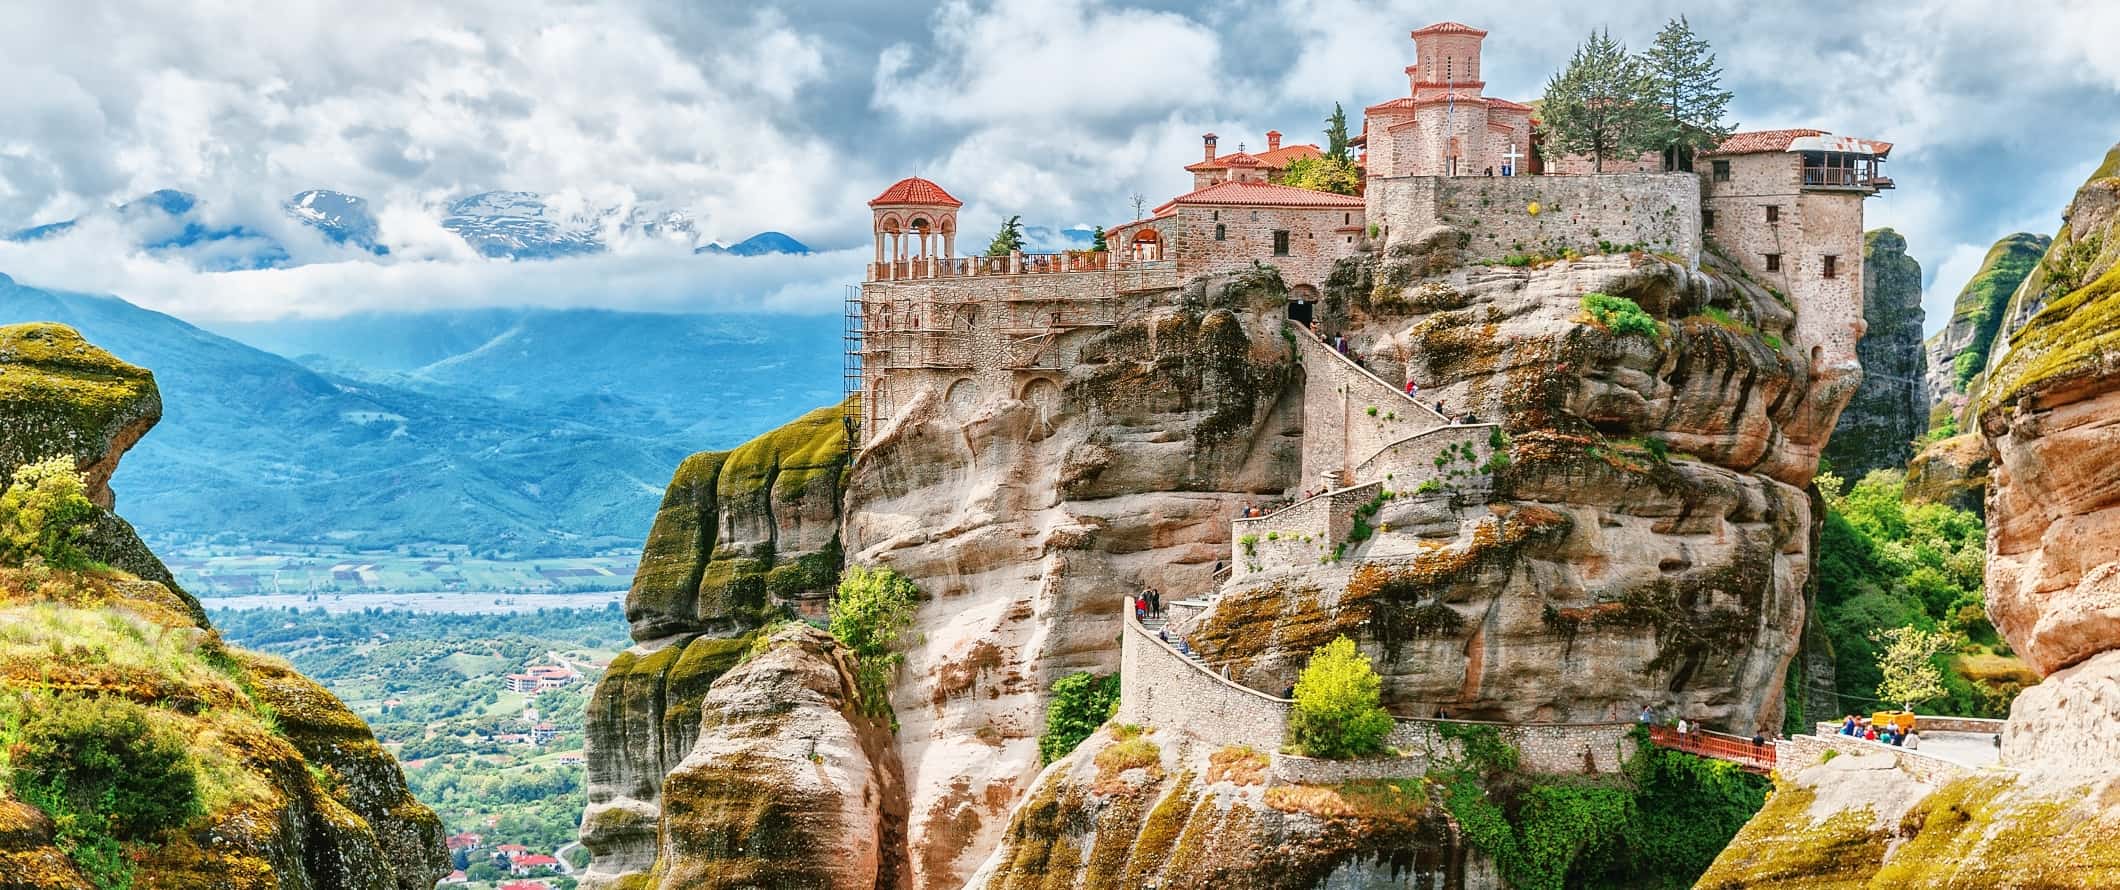 View of cliffside monasteries in Meteroa, Greece